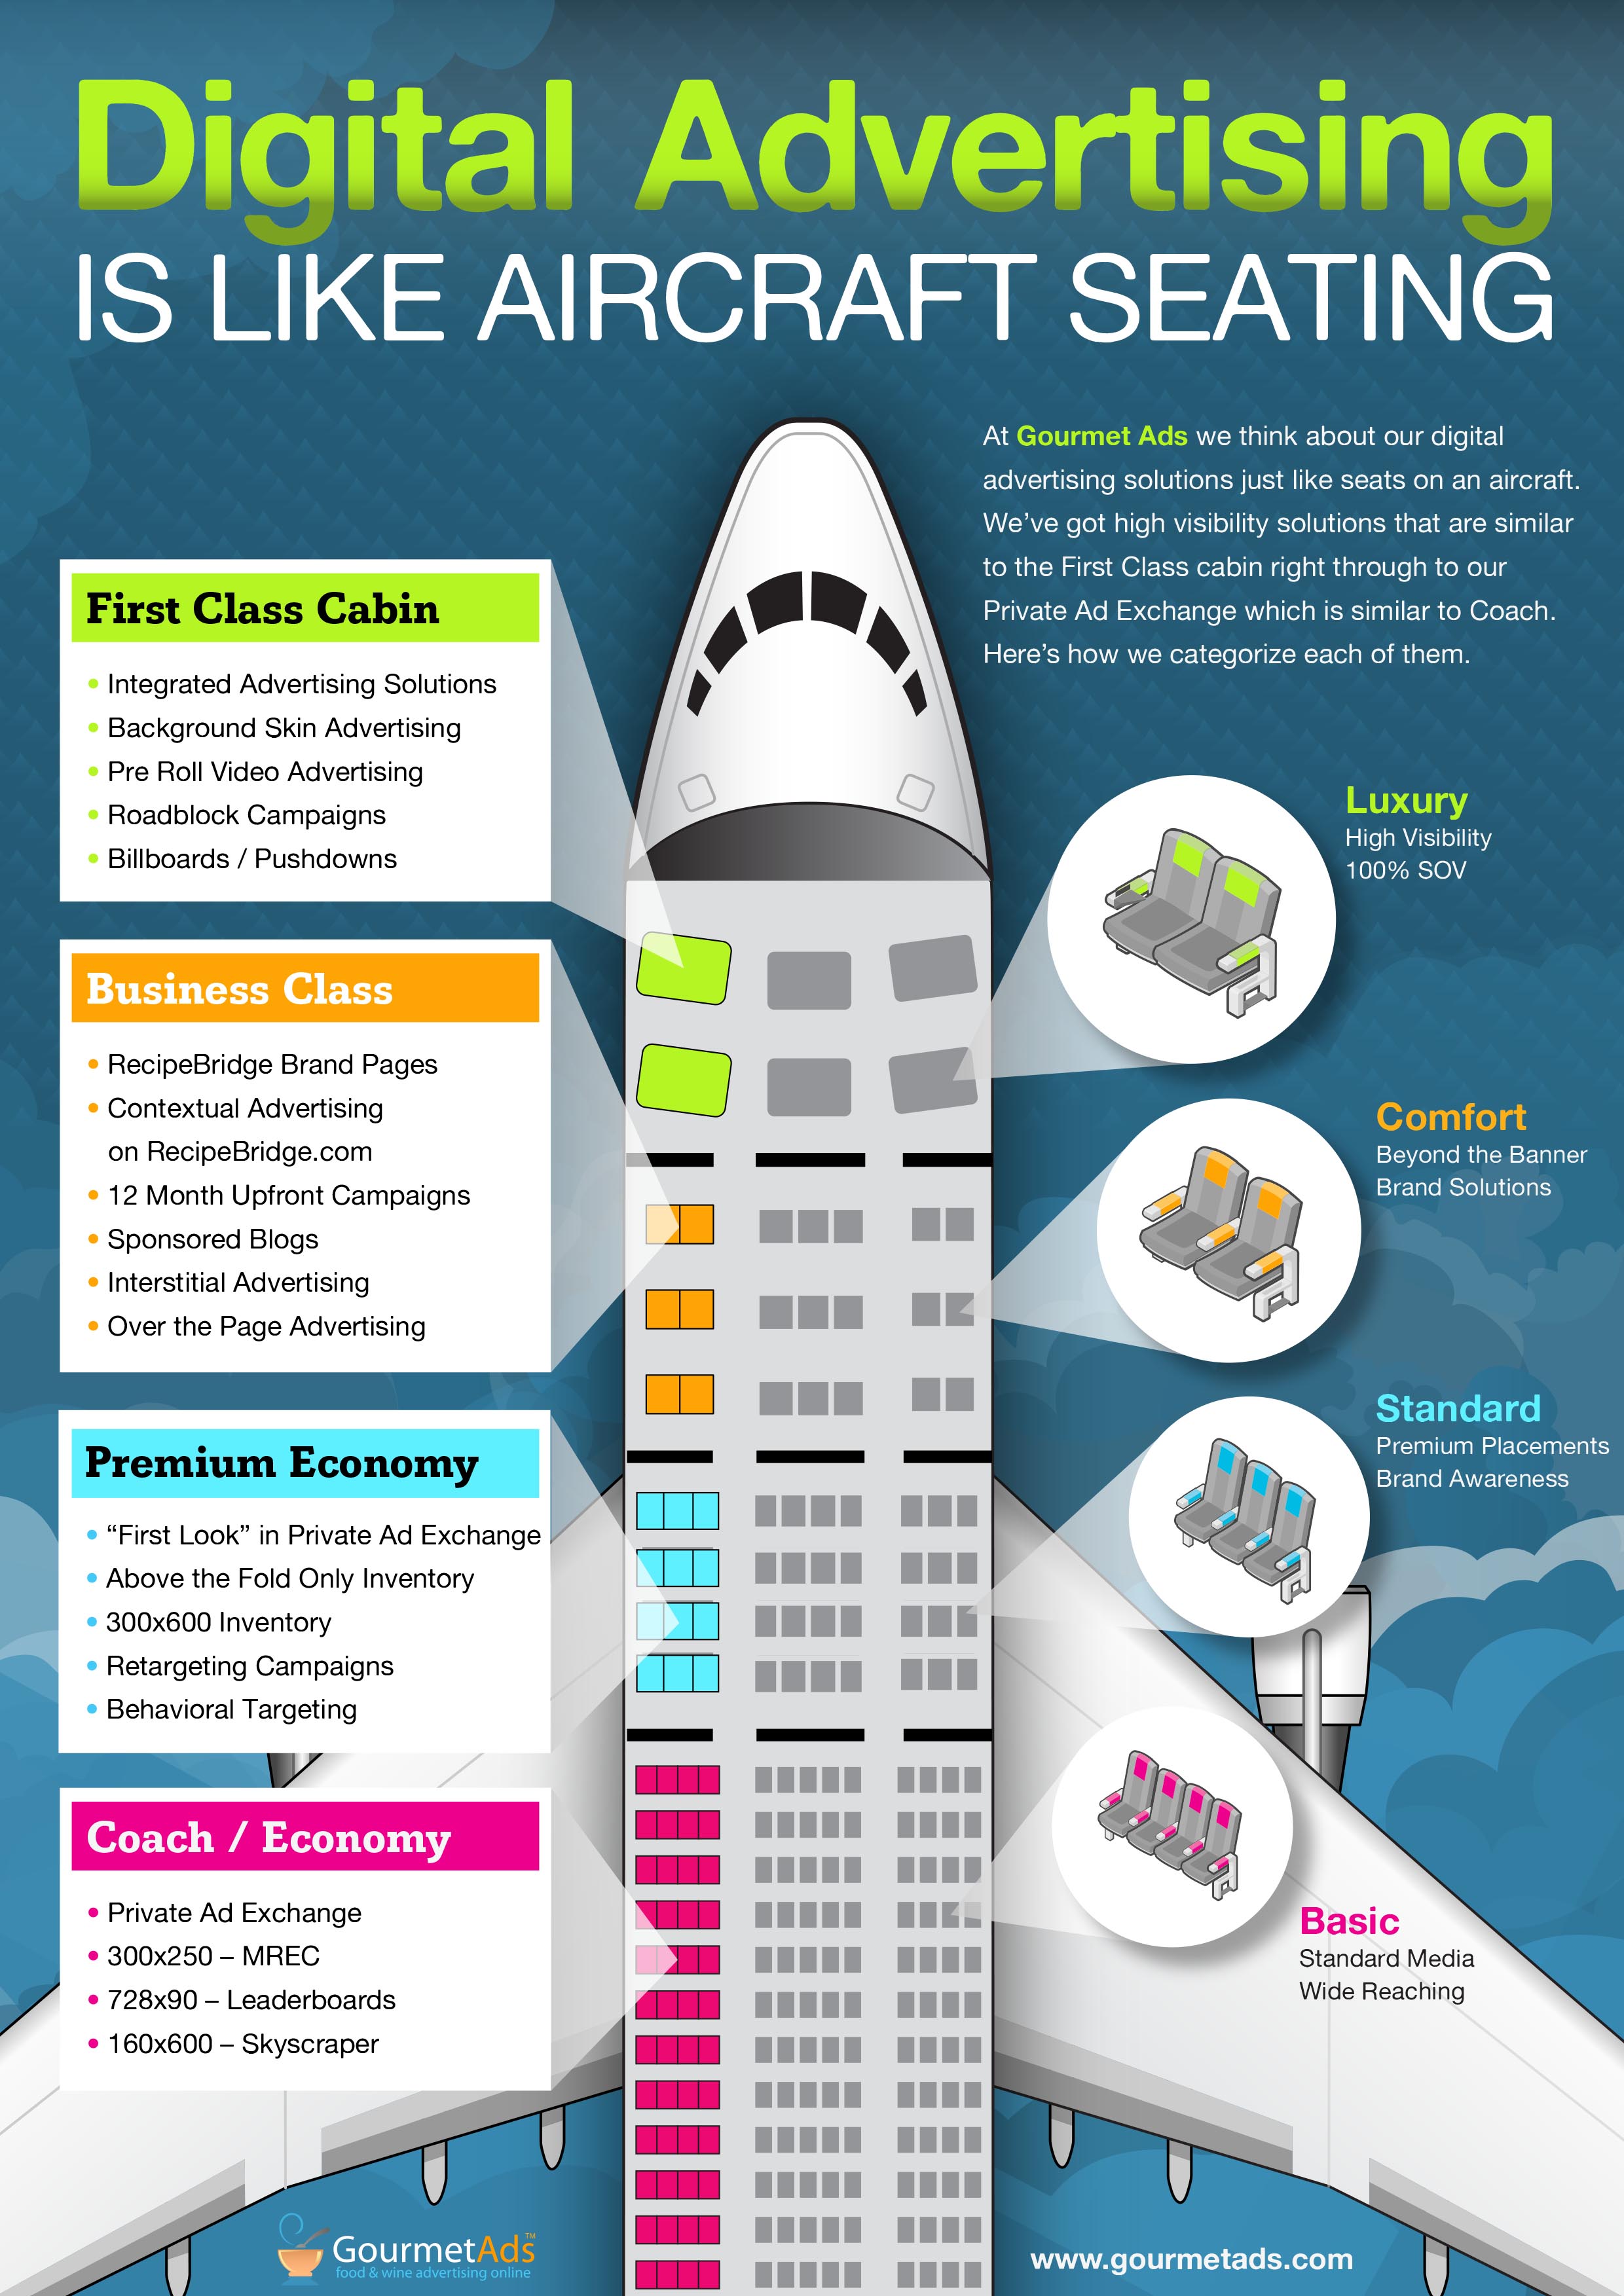 Digital Advertising and Airplane Seating